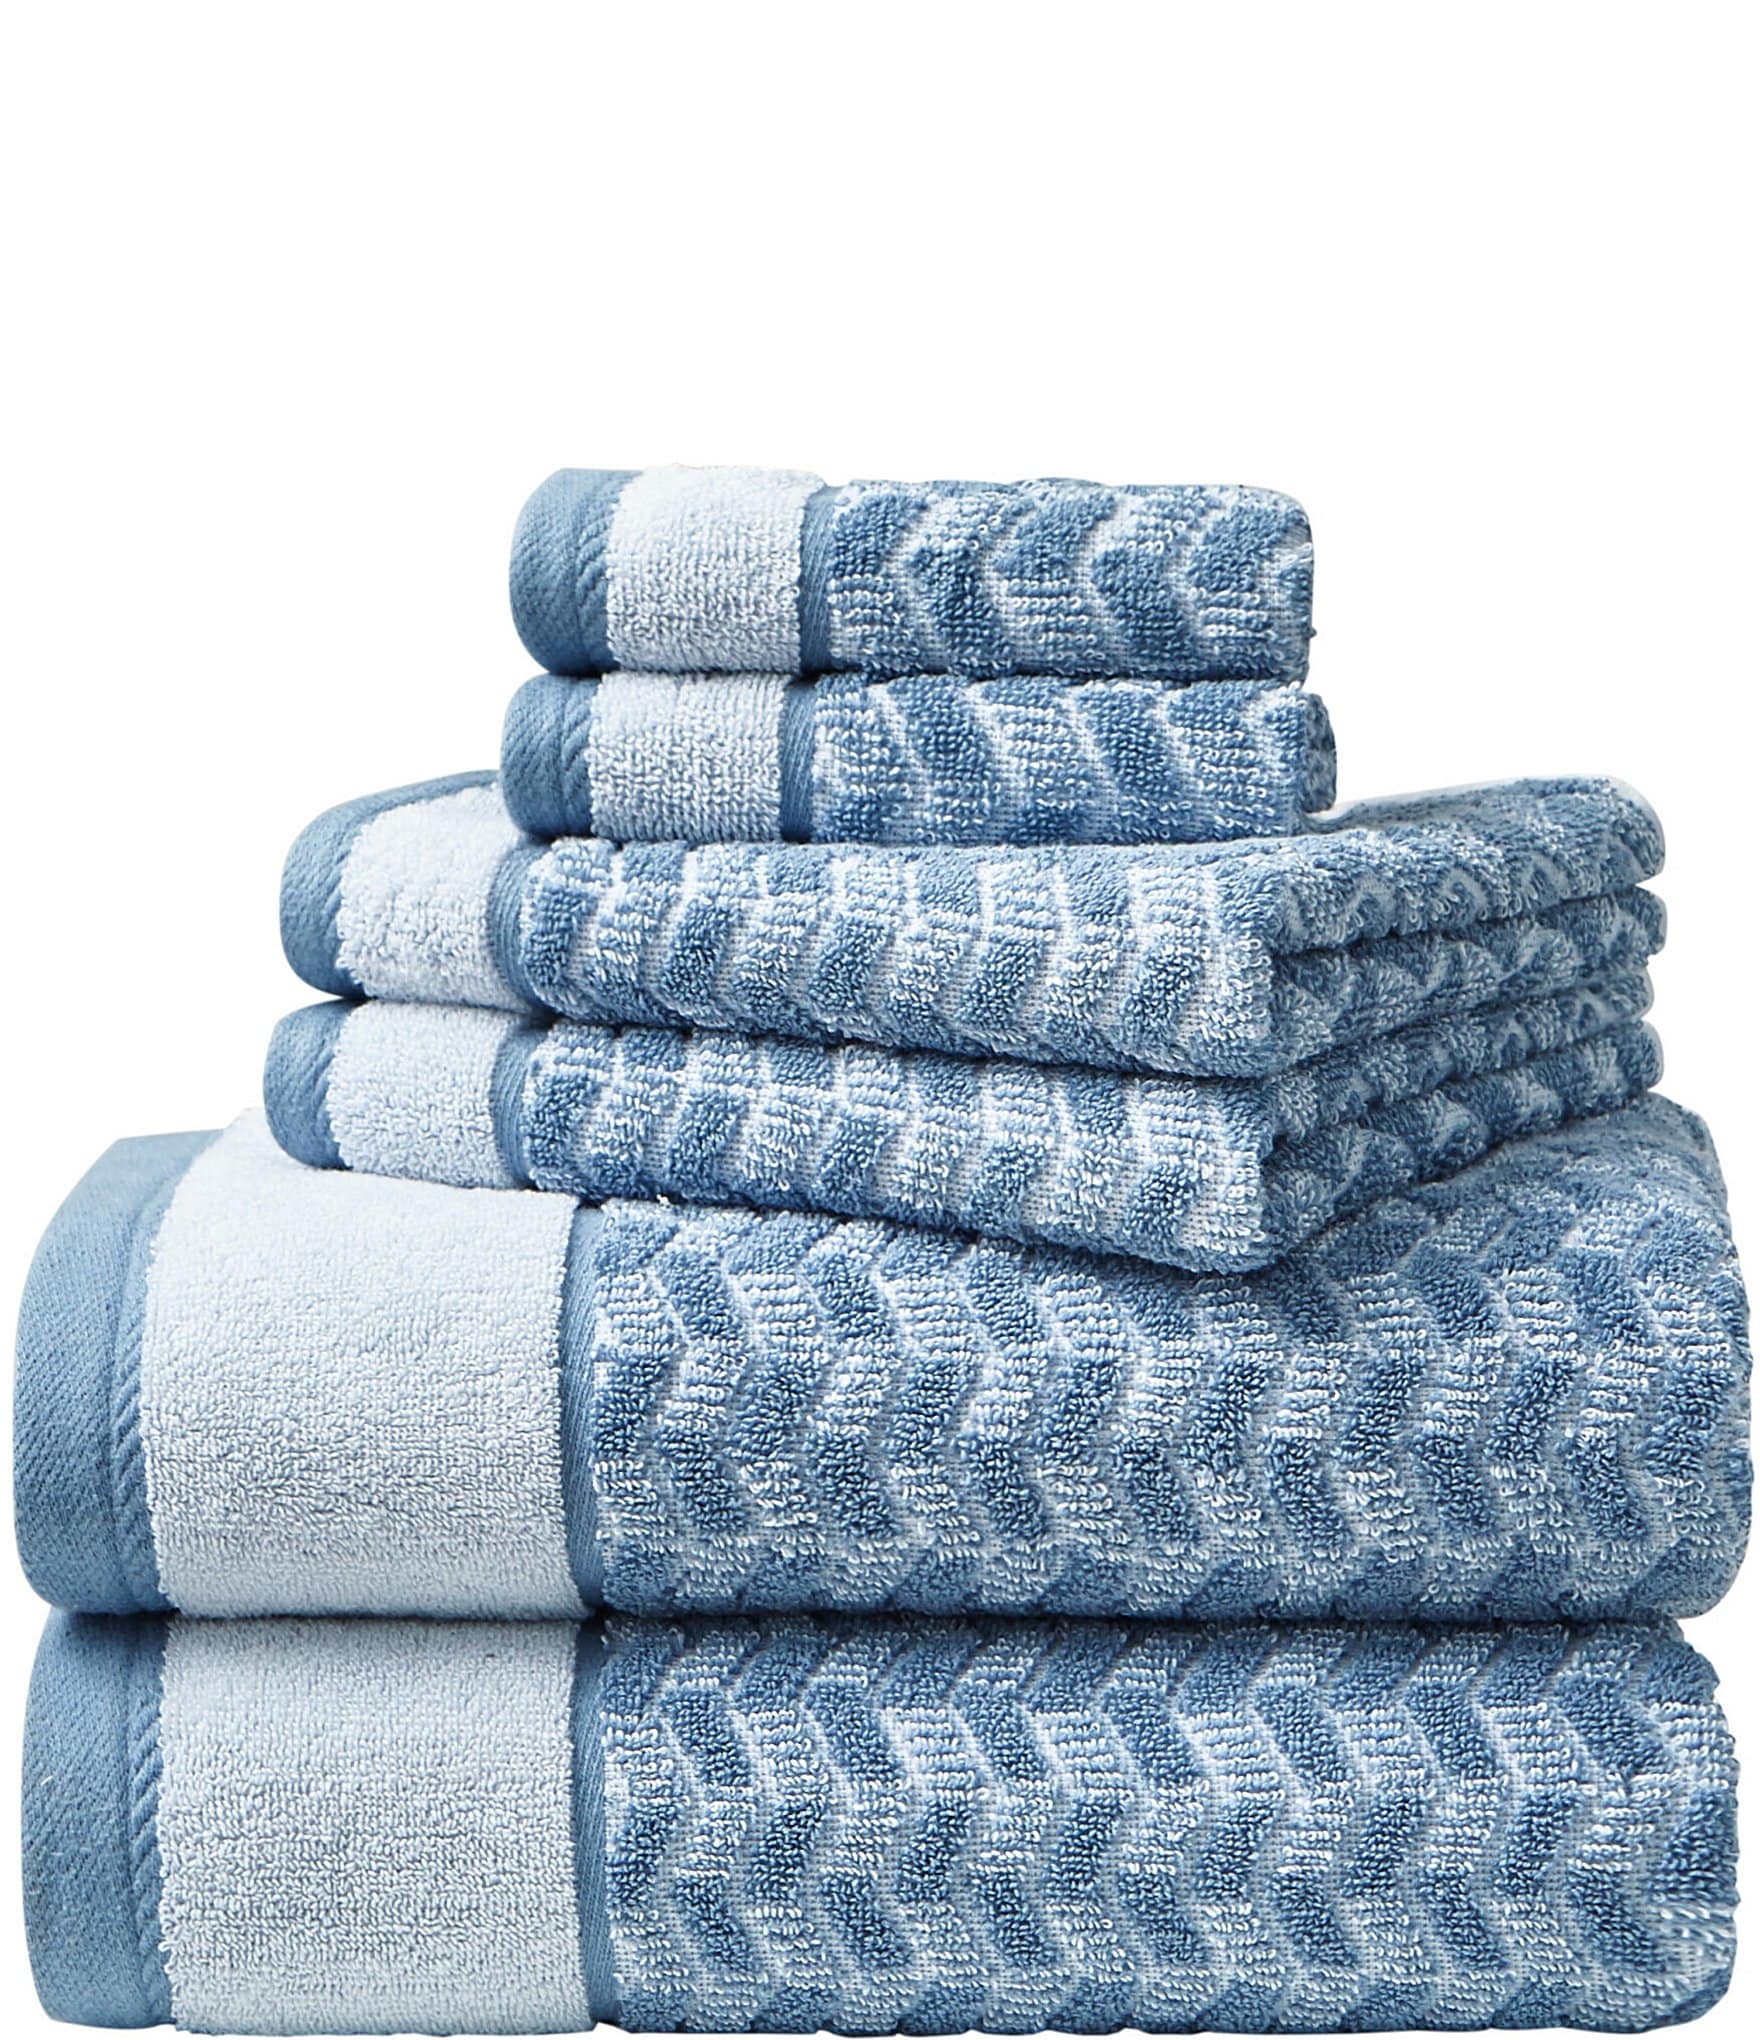 Somerset Home Chevron 100% Cotton 6-Piece Towel Set - White